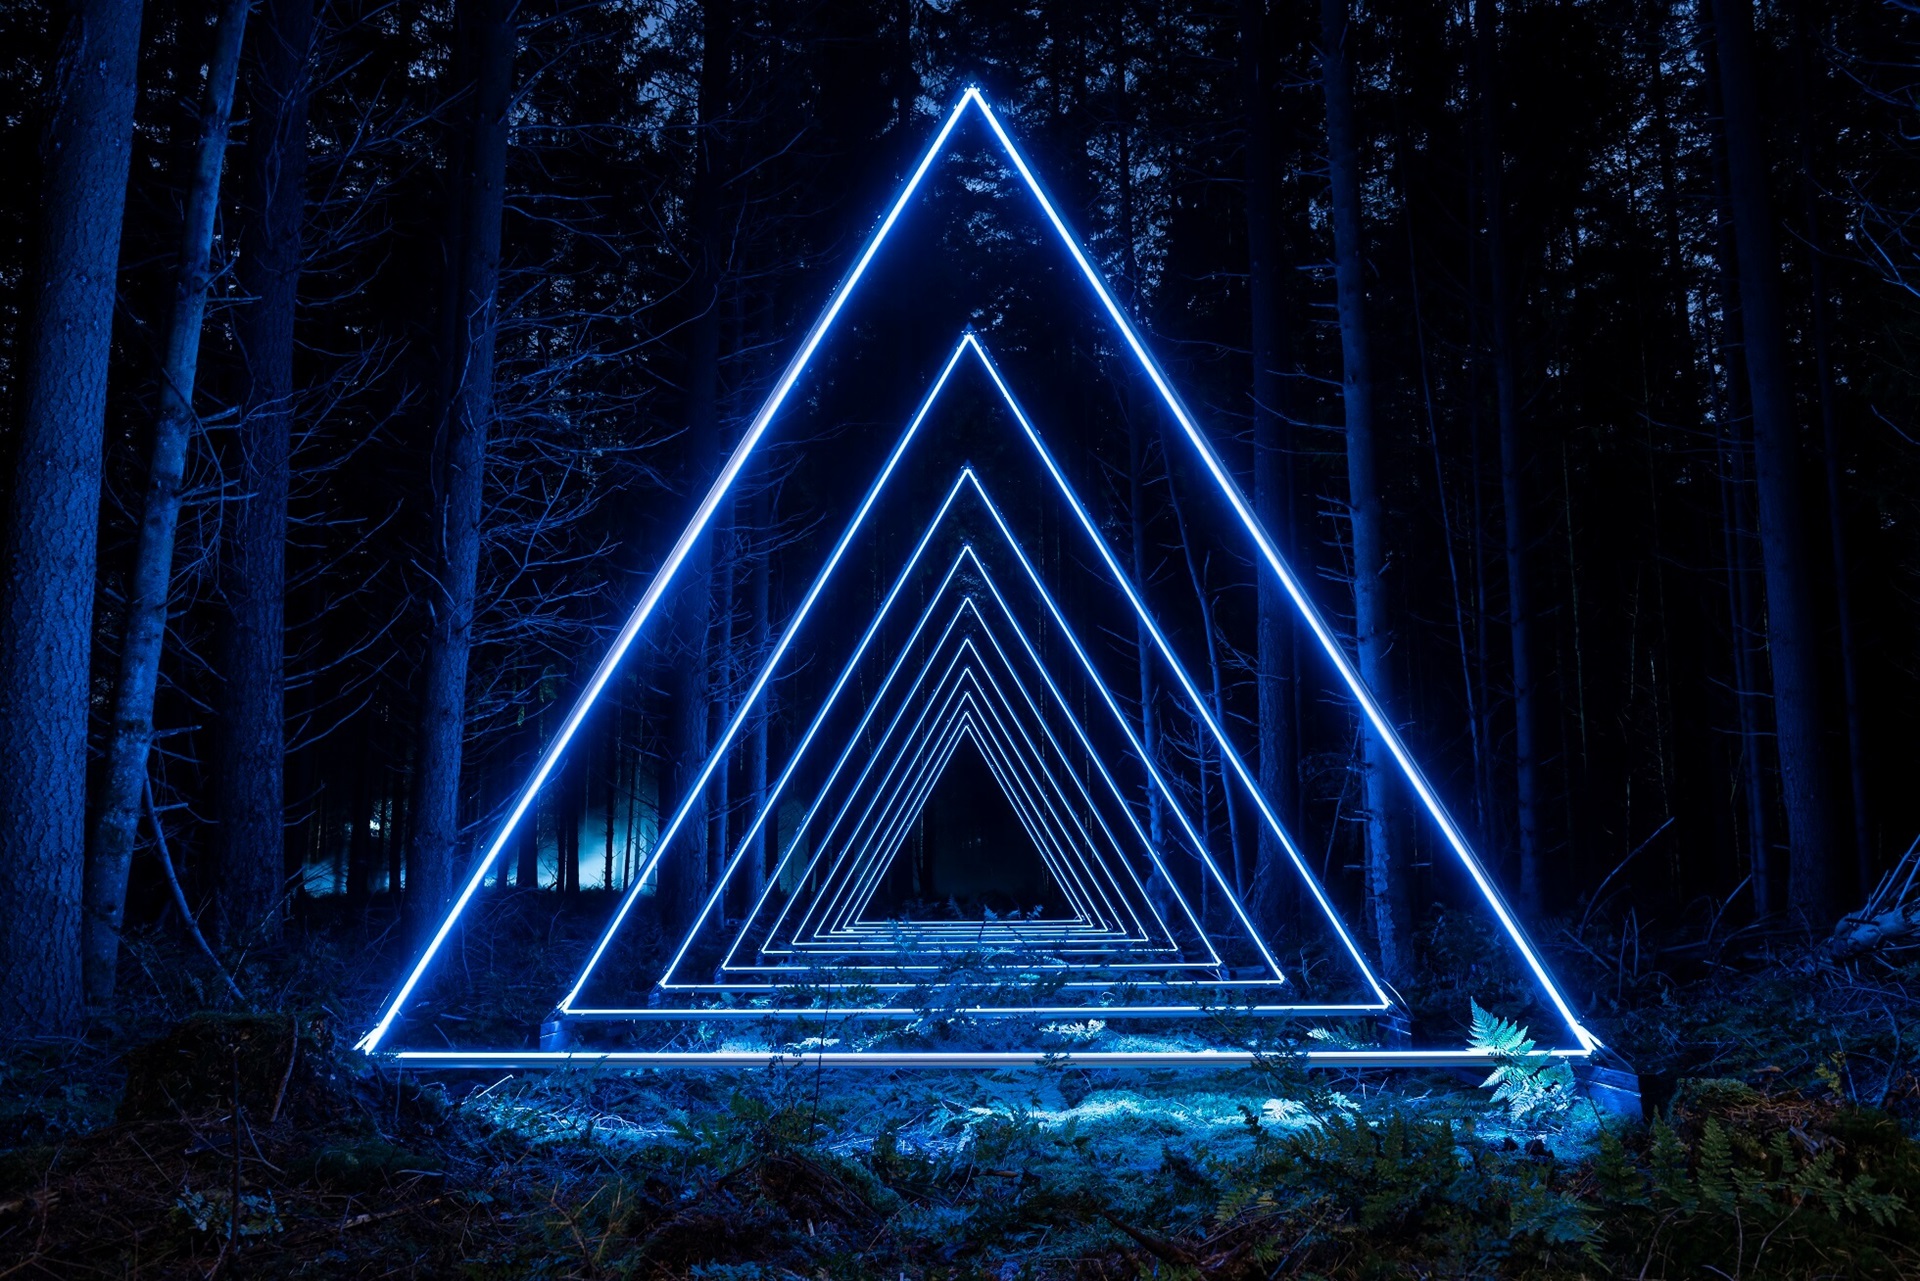 Luces azules, triangulares y muy iluminadas en un bosque oscuro